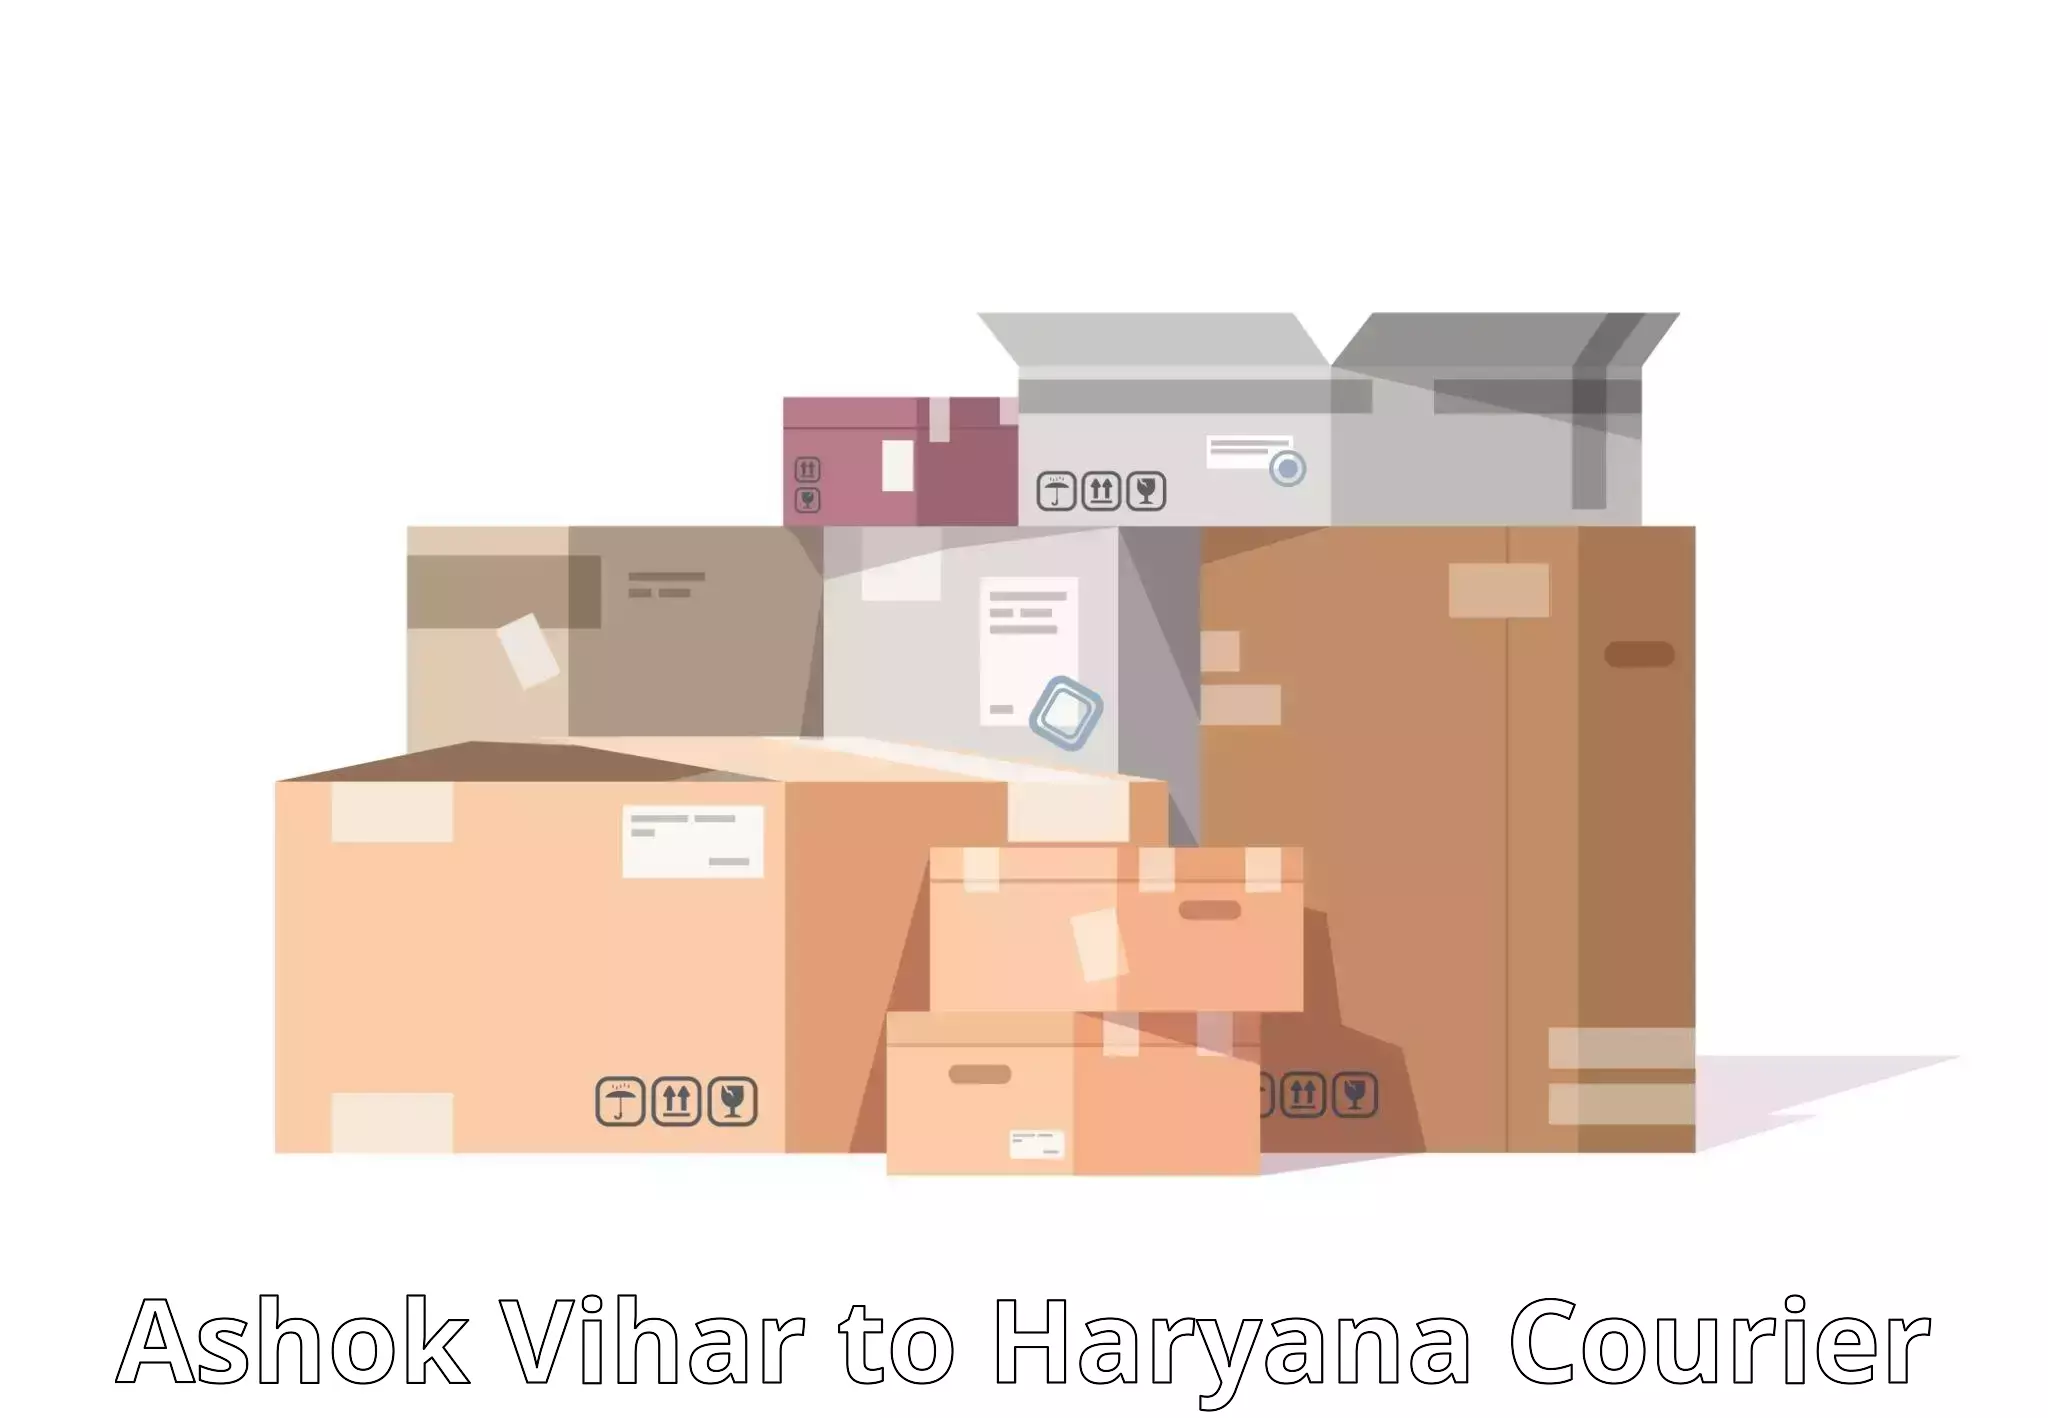 Courier service comparison in Ashok Vihar to Ambala